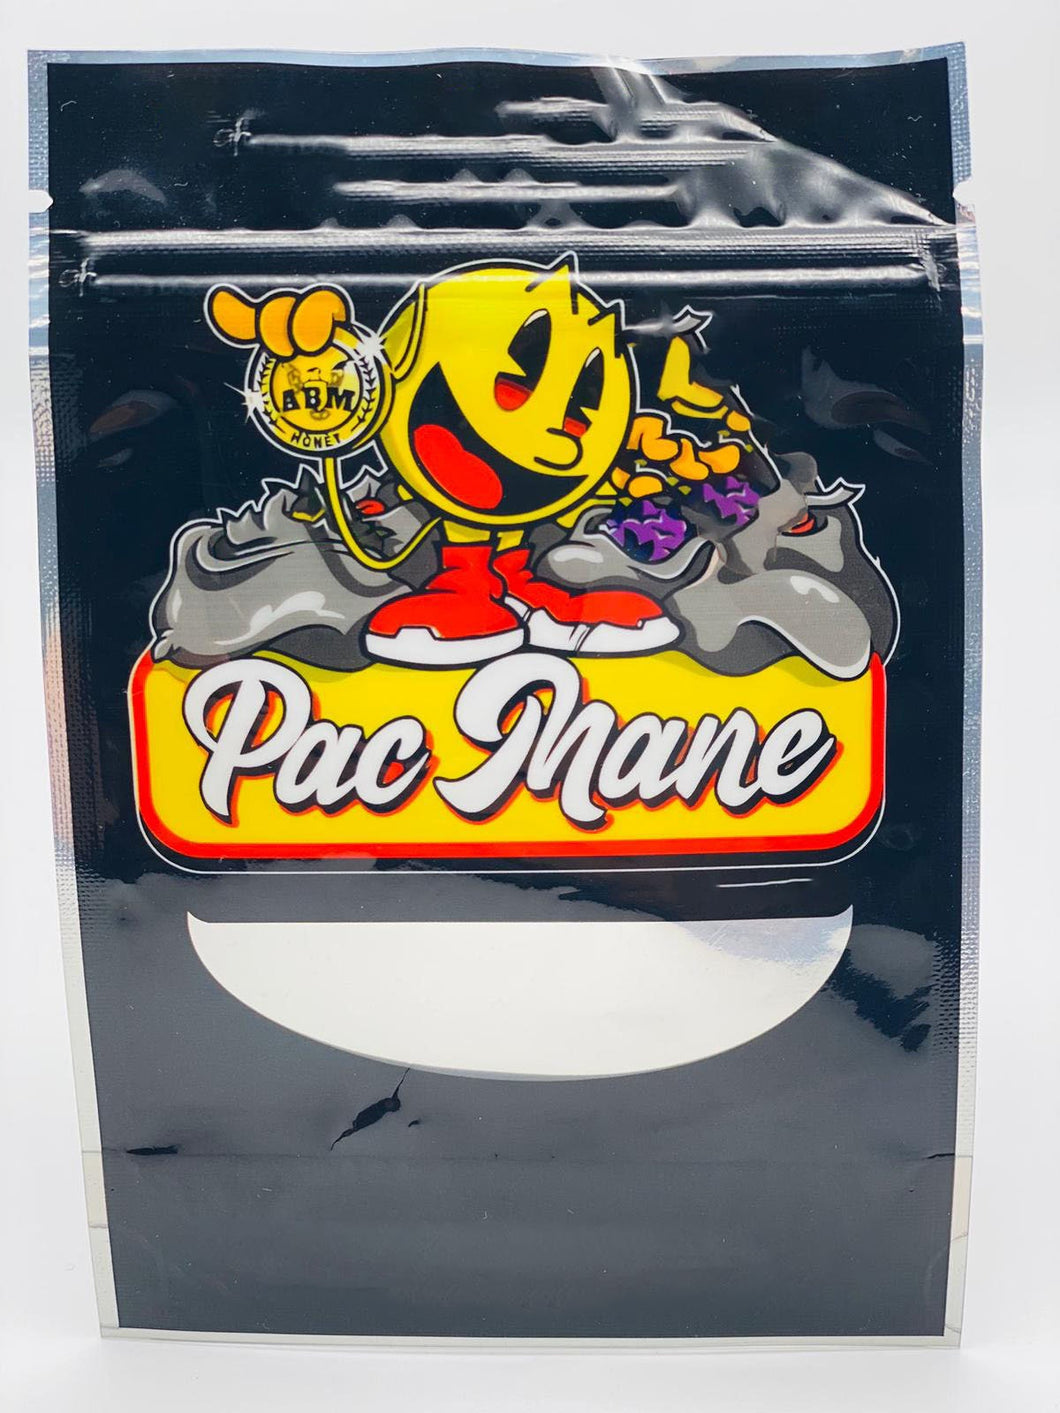 50 Pac Mane 3.5 gram empty Mylar bags